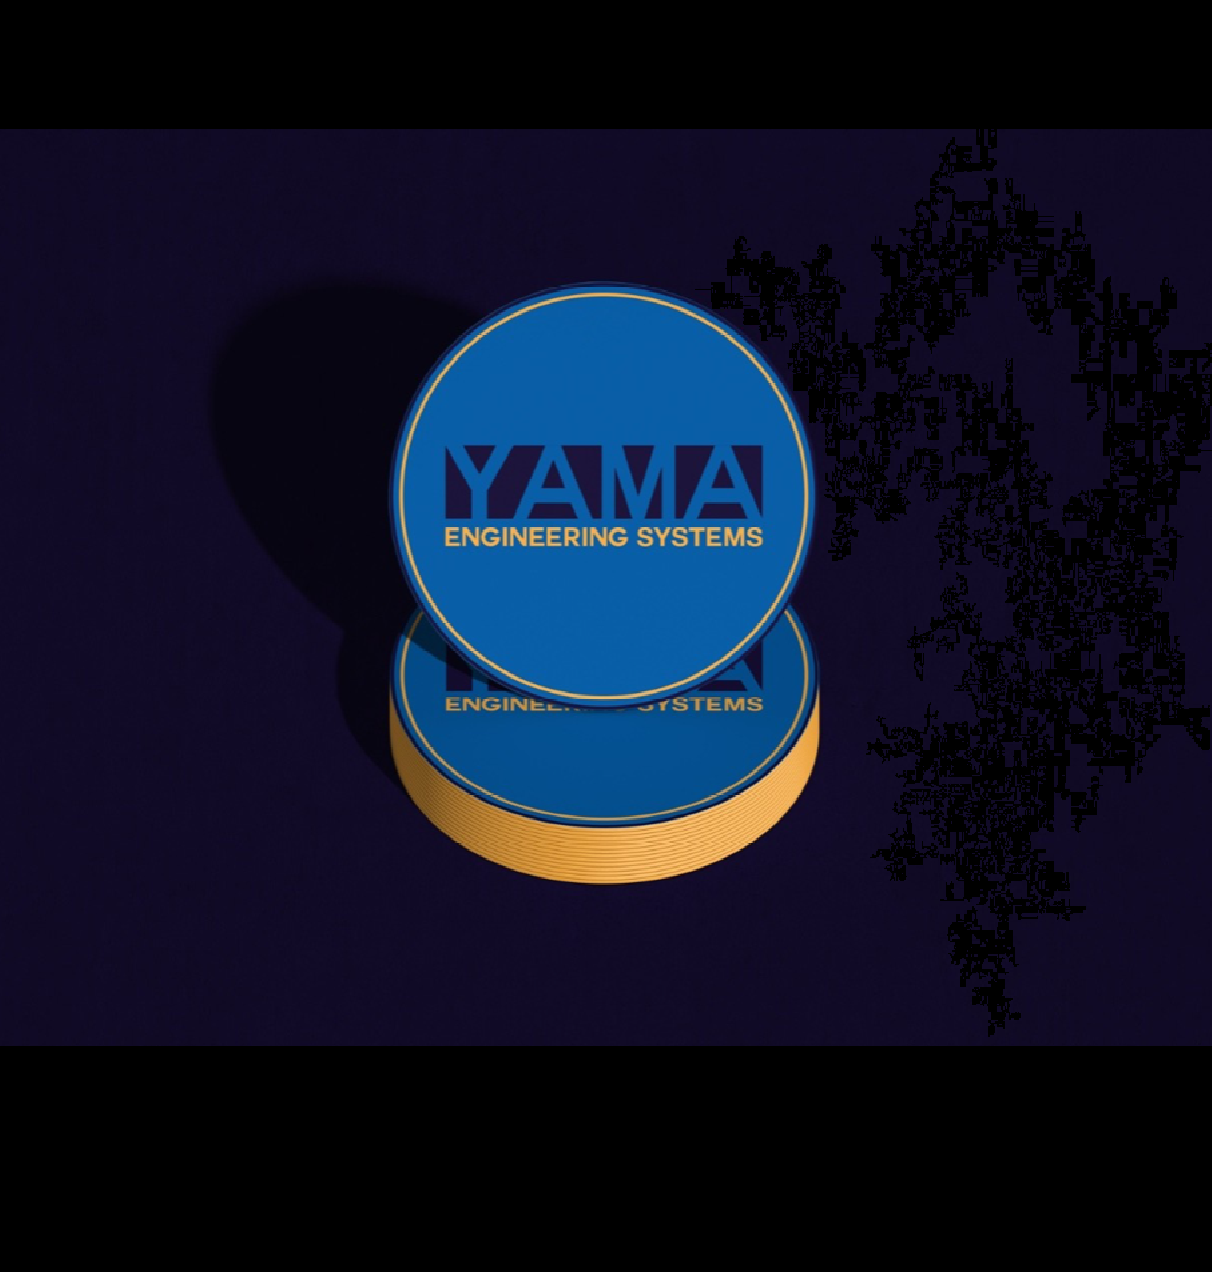 yama engineering systems